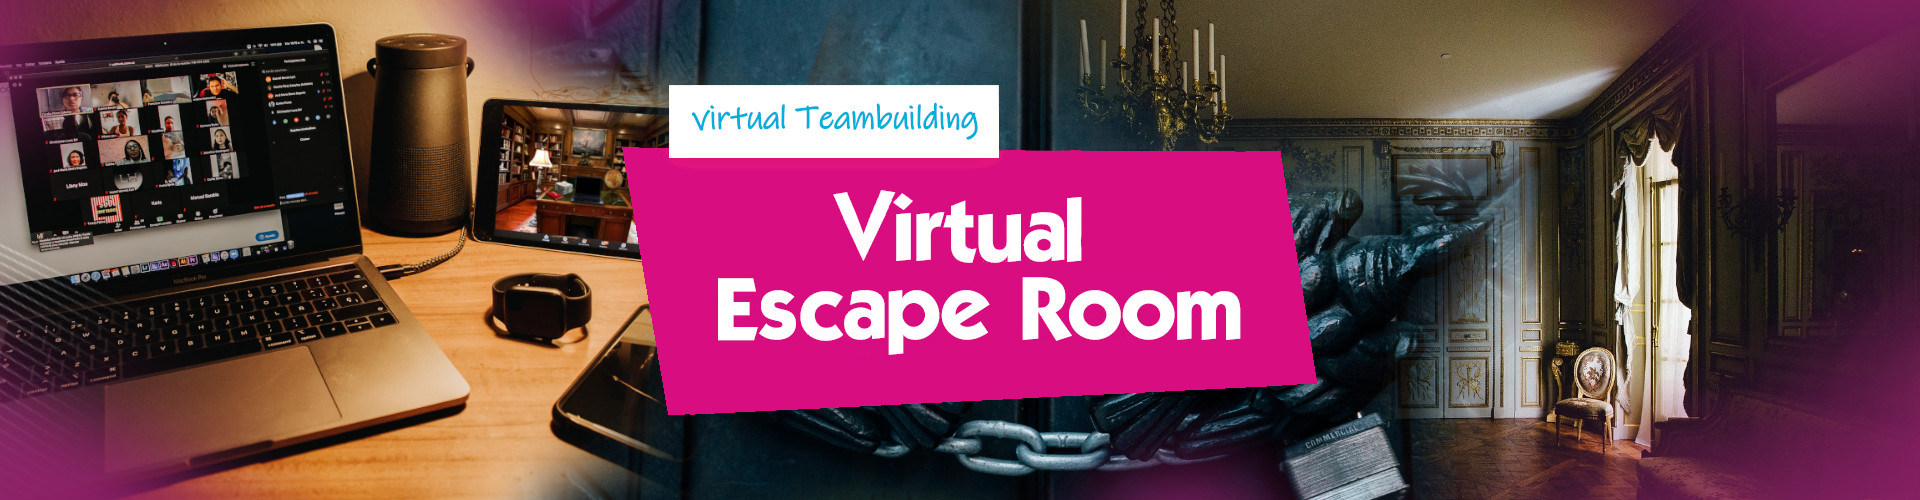 Virtual Escape Room banner